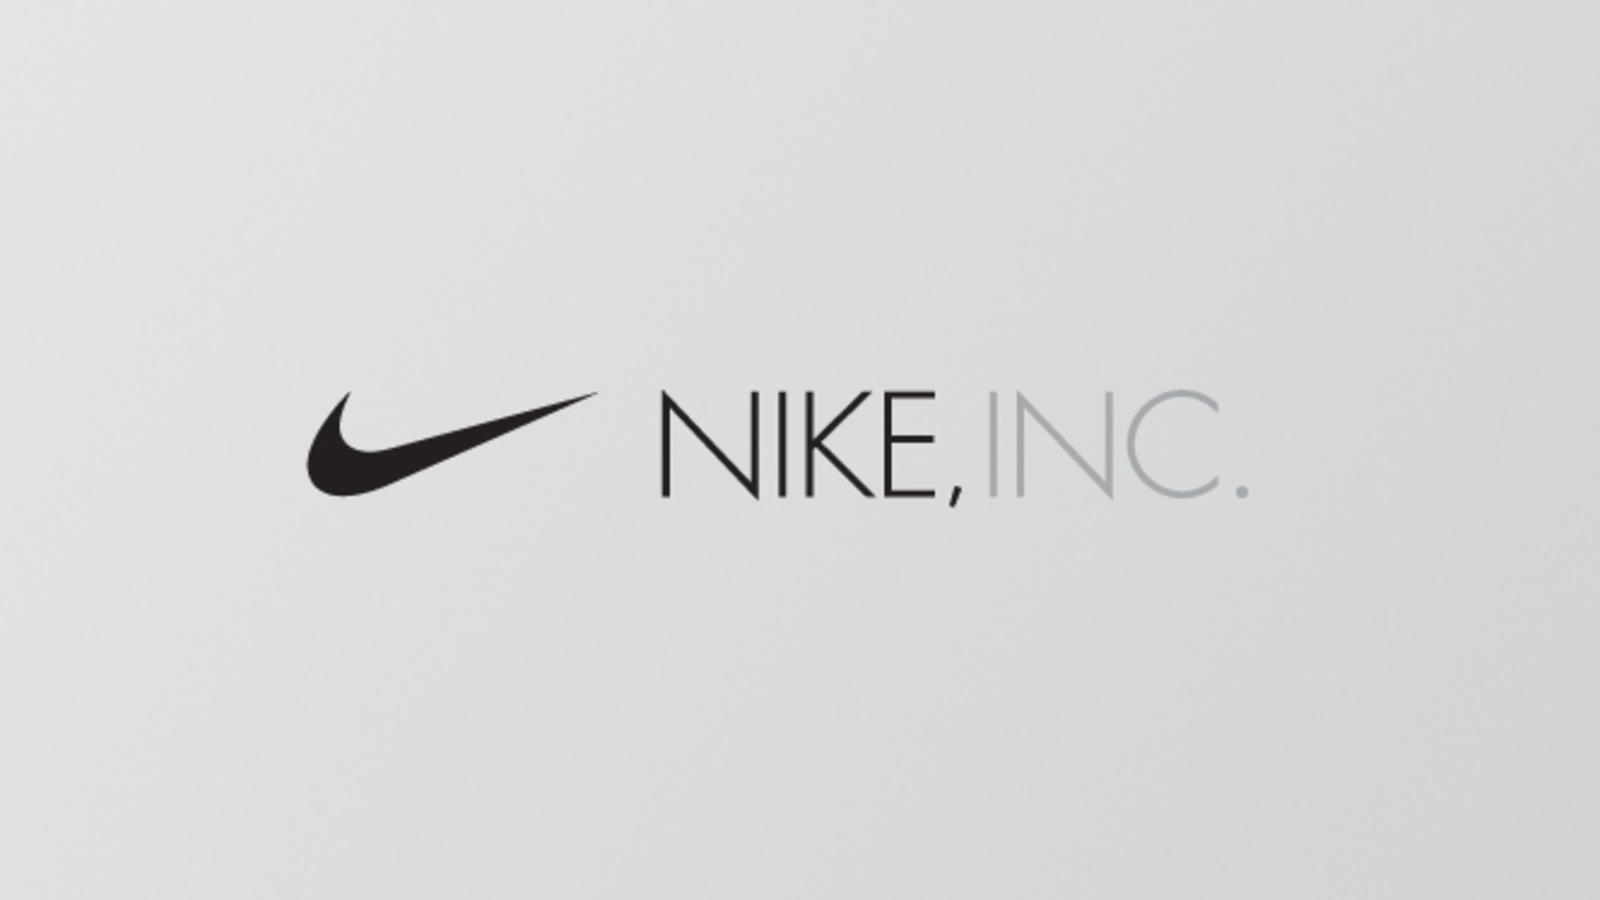 Nike Company Logo